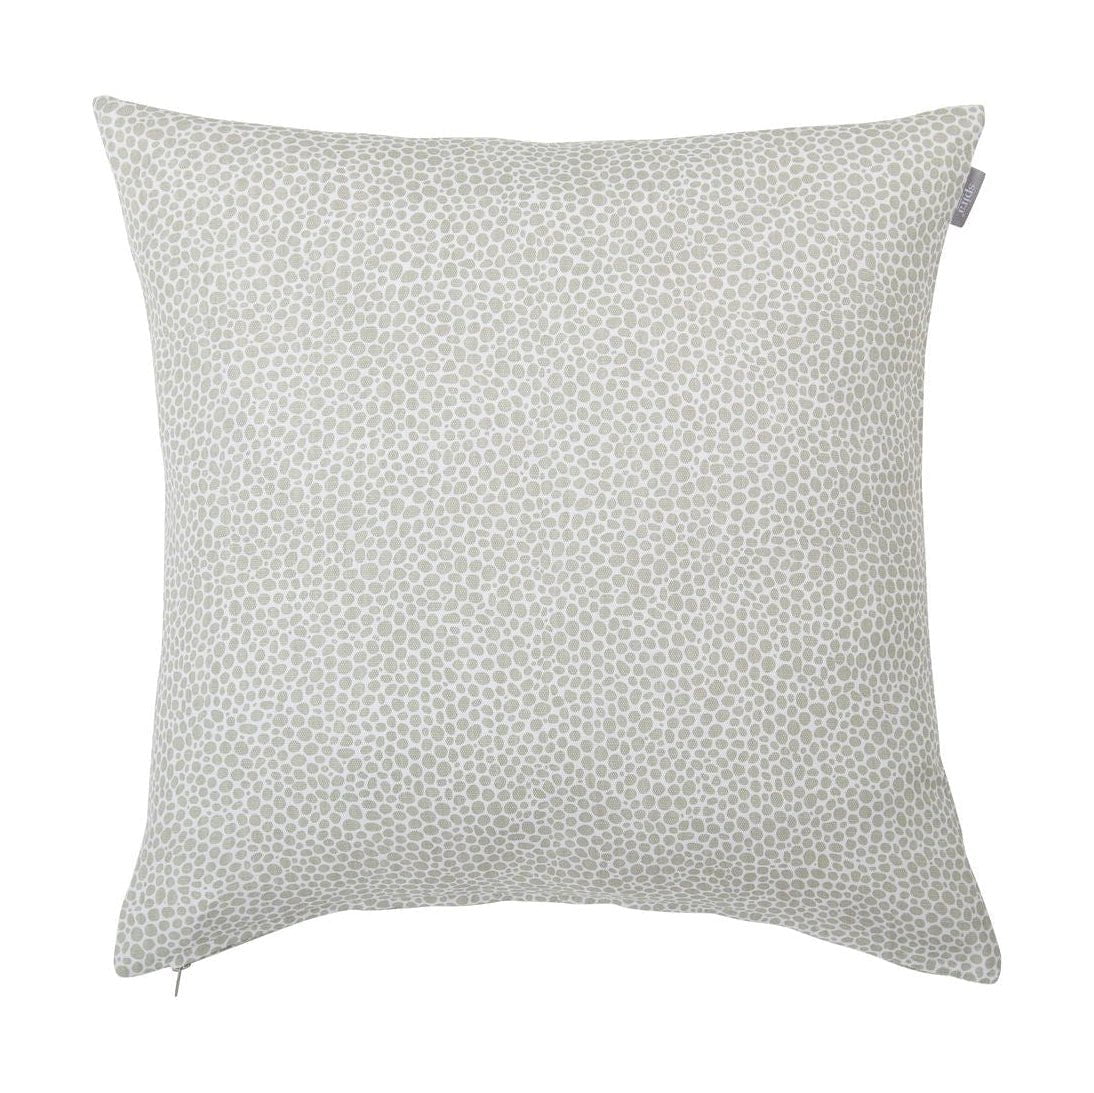 Spira Dotte 50 Cushion Cover, Linen